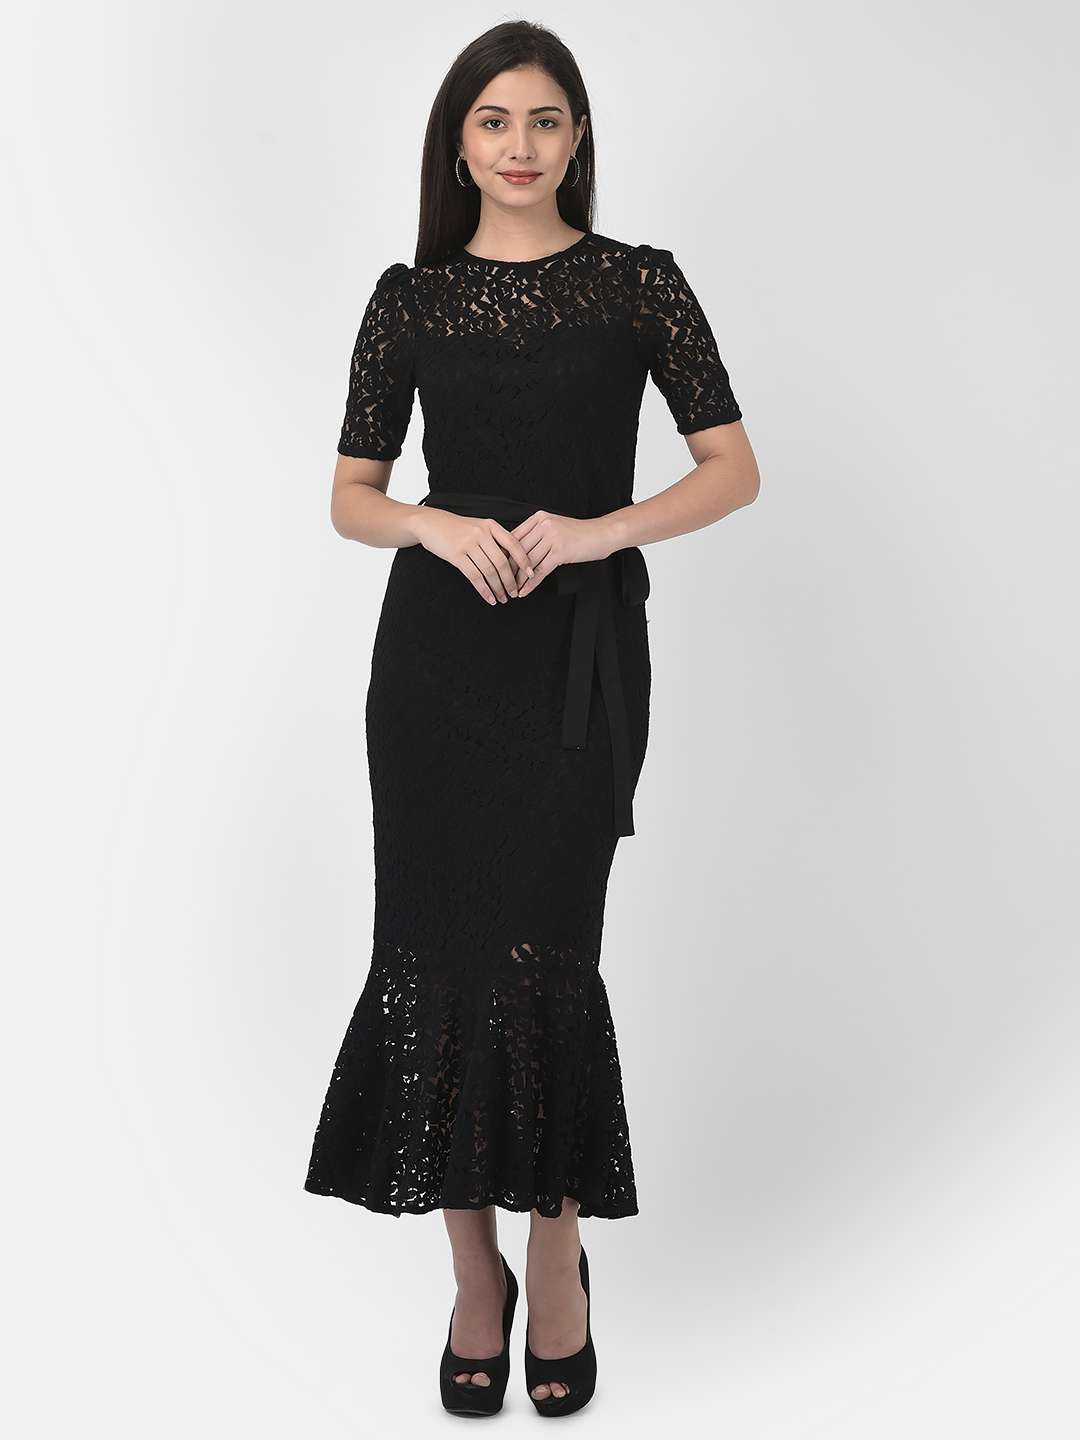 Eavan Black Lace Midi Dress